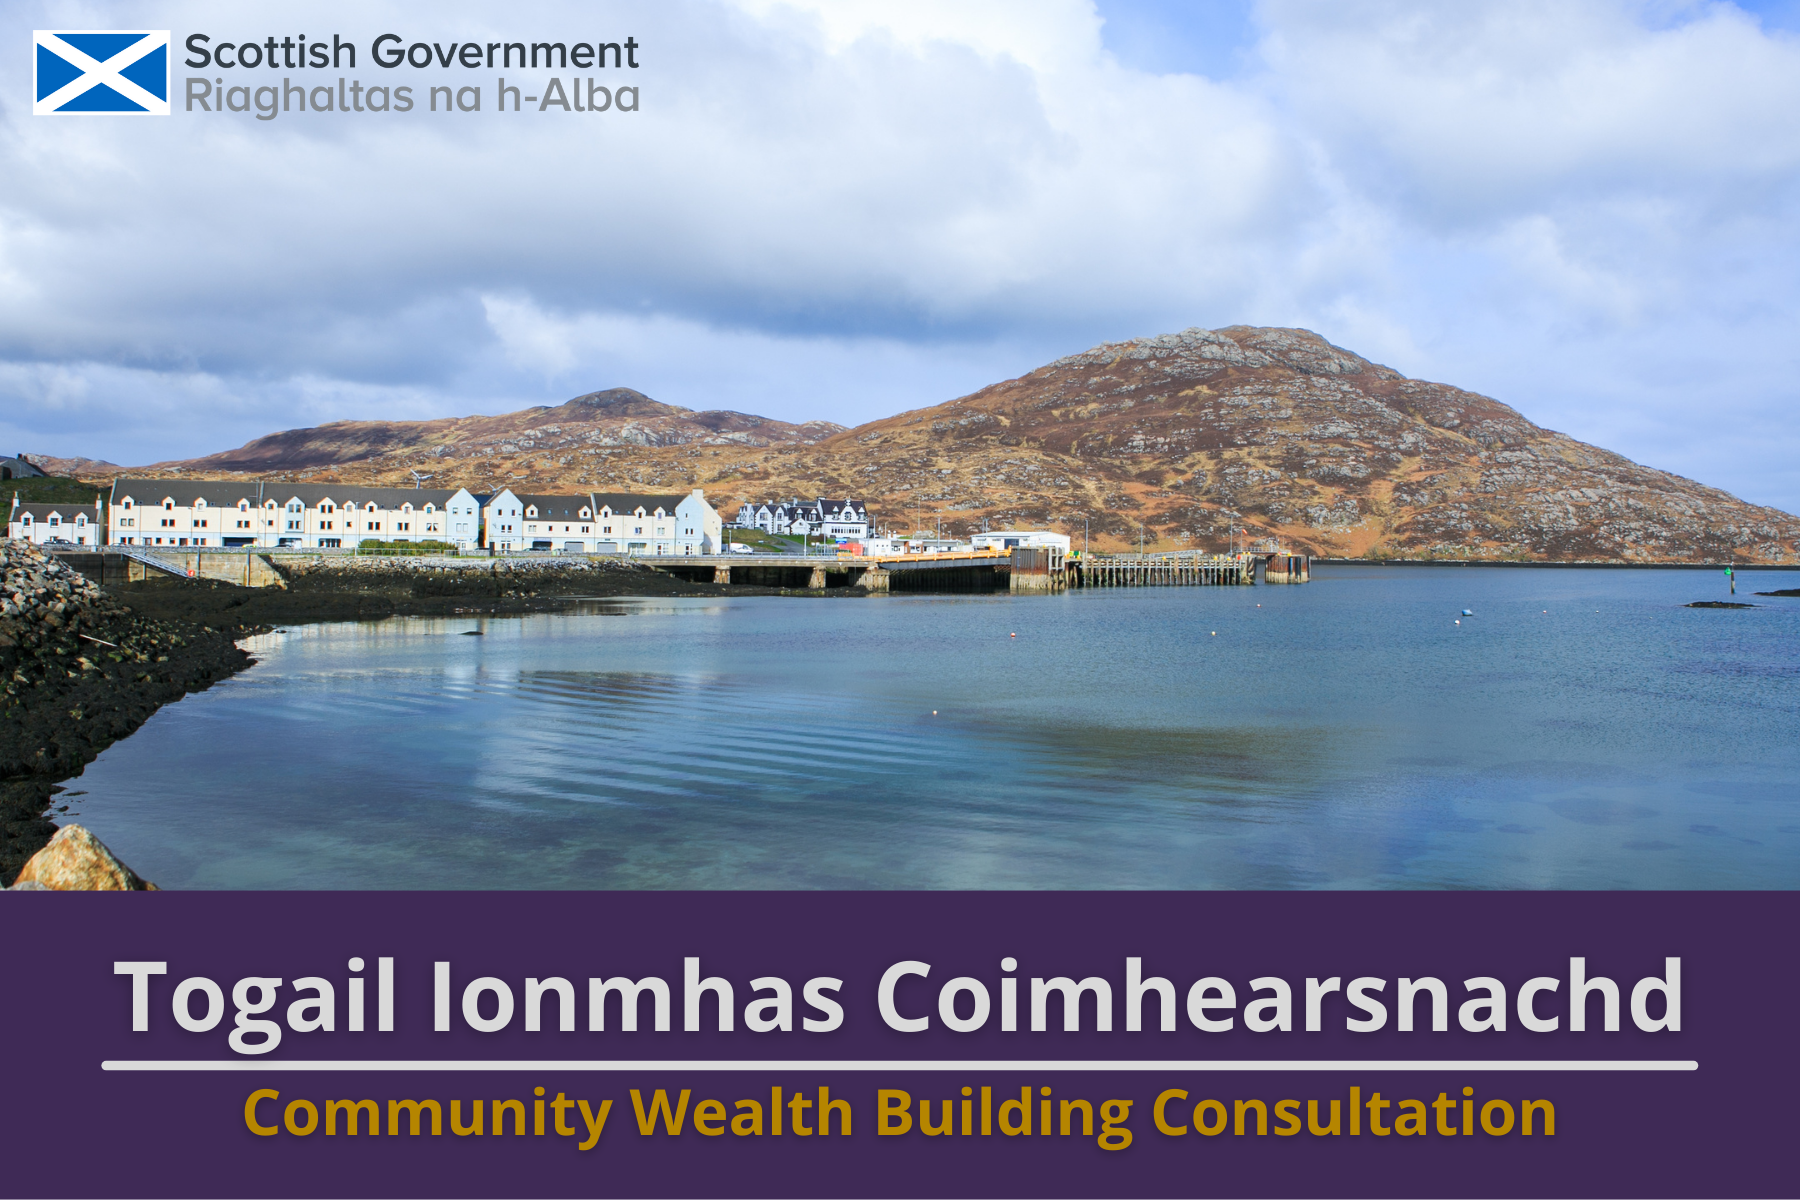 Community Wealth Building Consultation